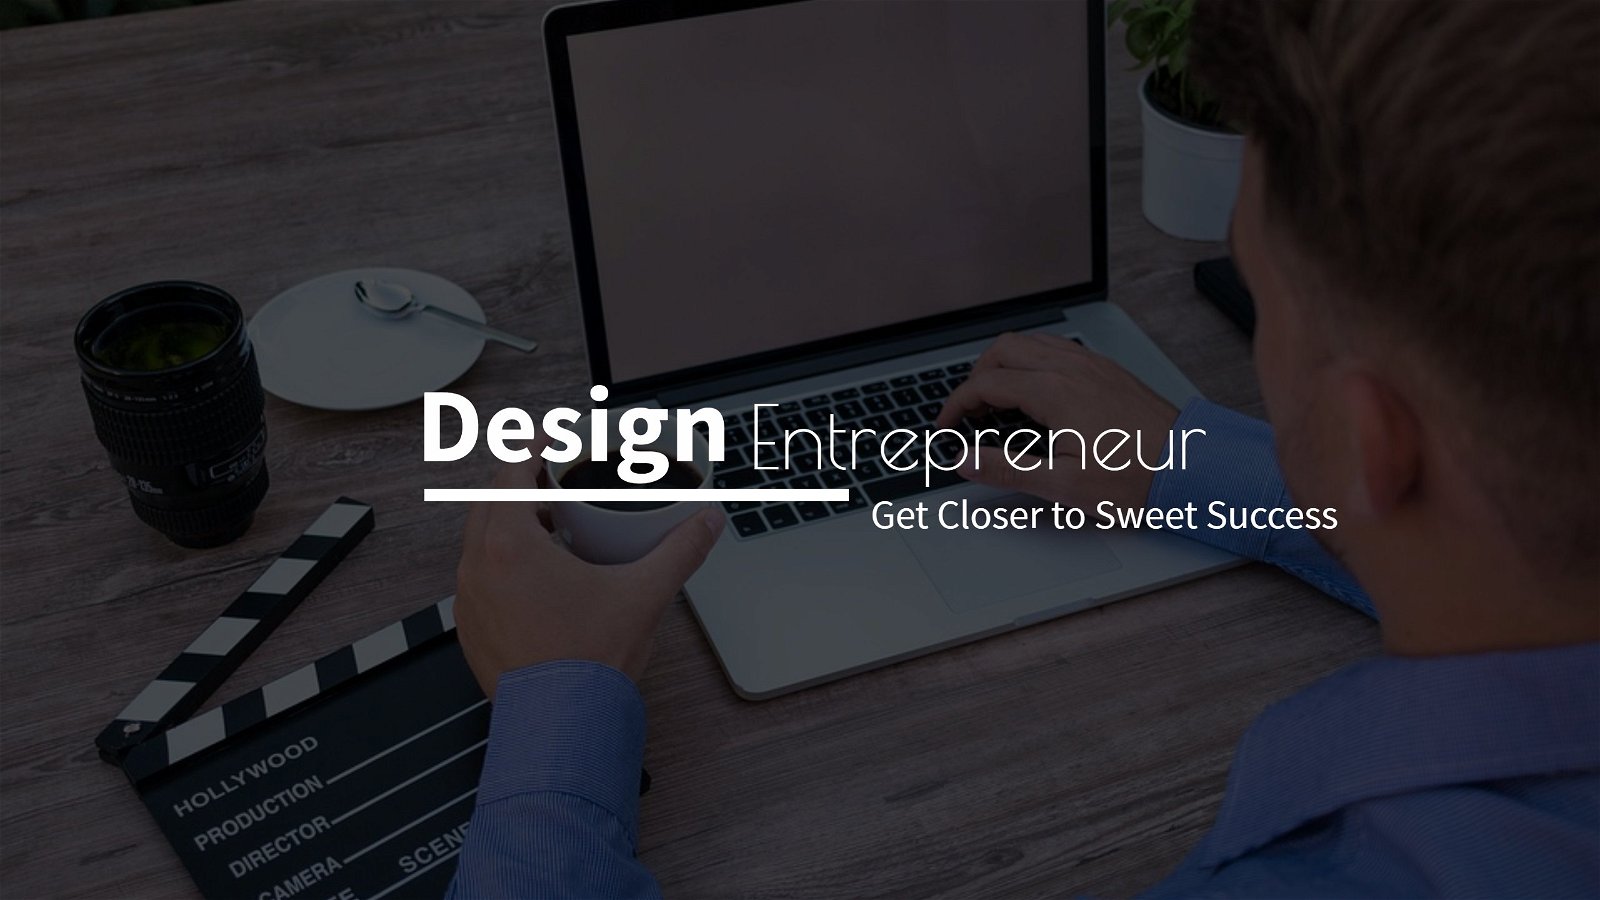 Design Entrepreneur